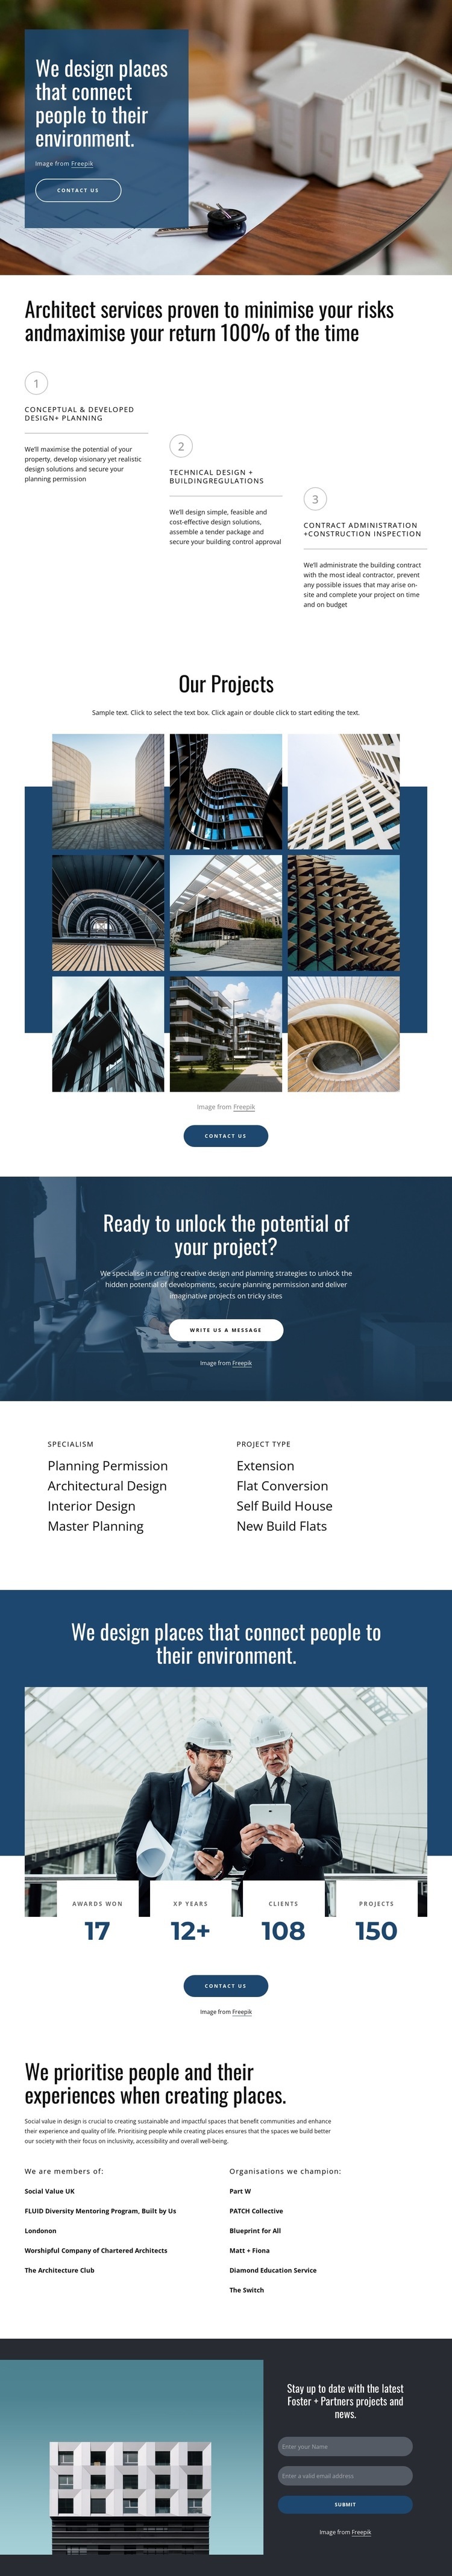 We design amazing projects Webflow Template Alternative